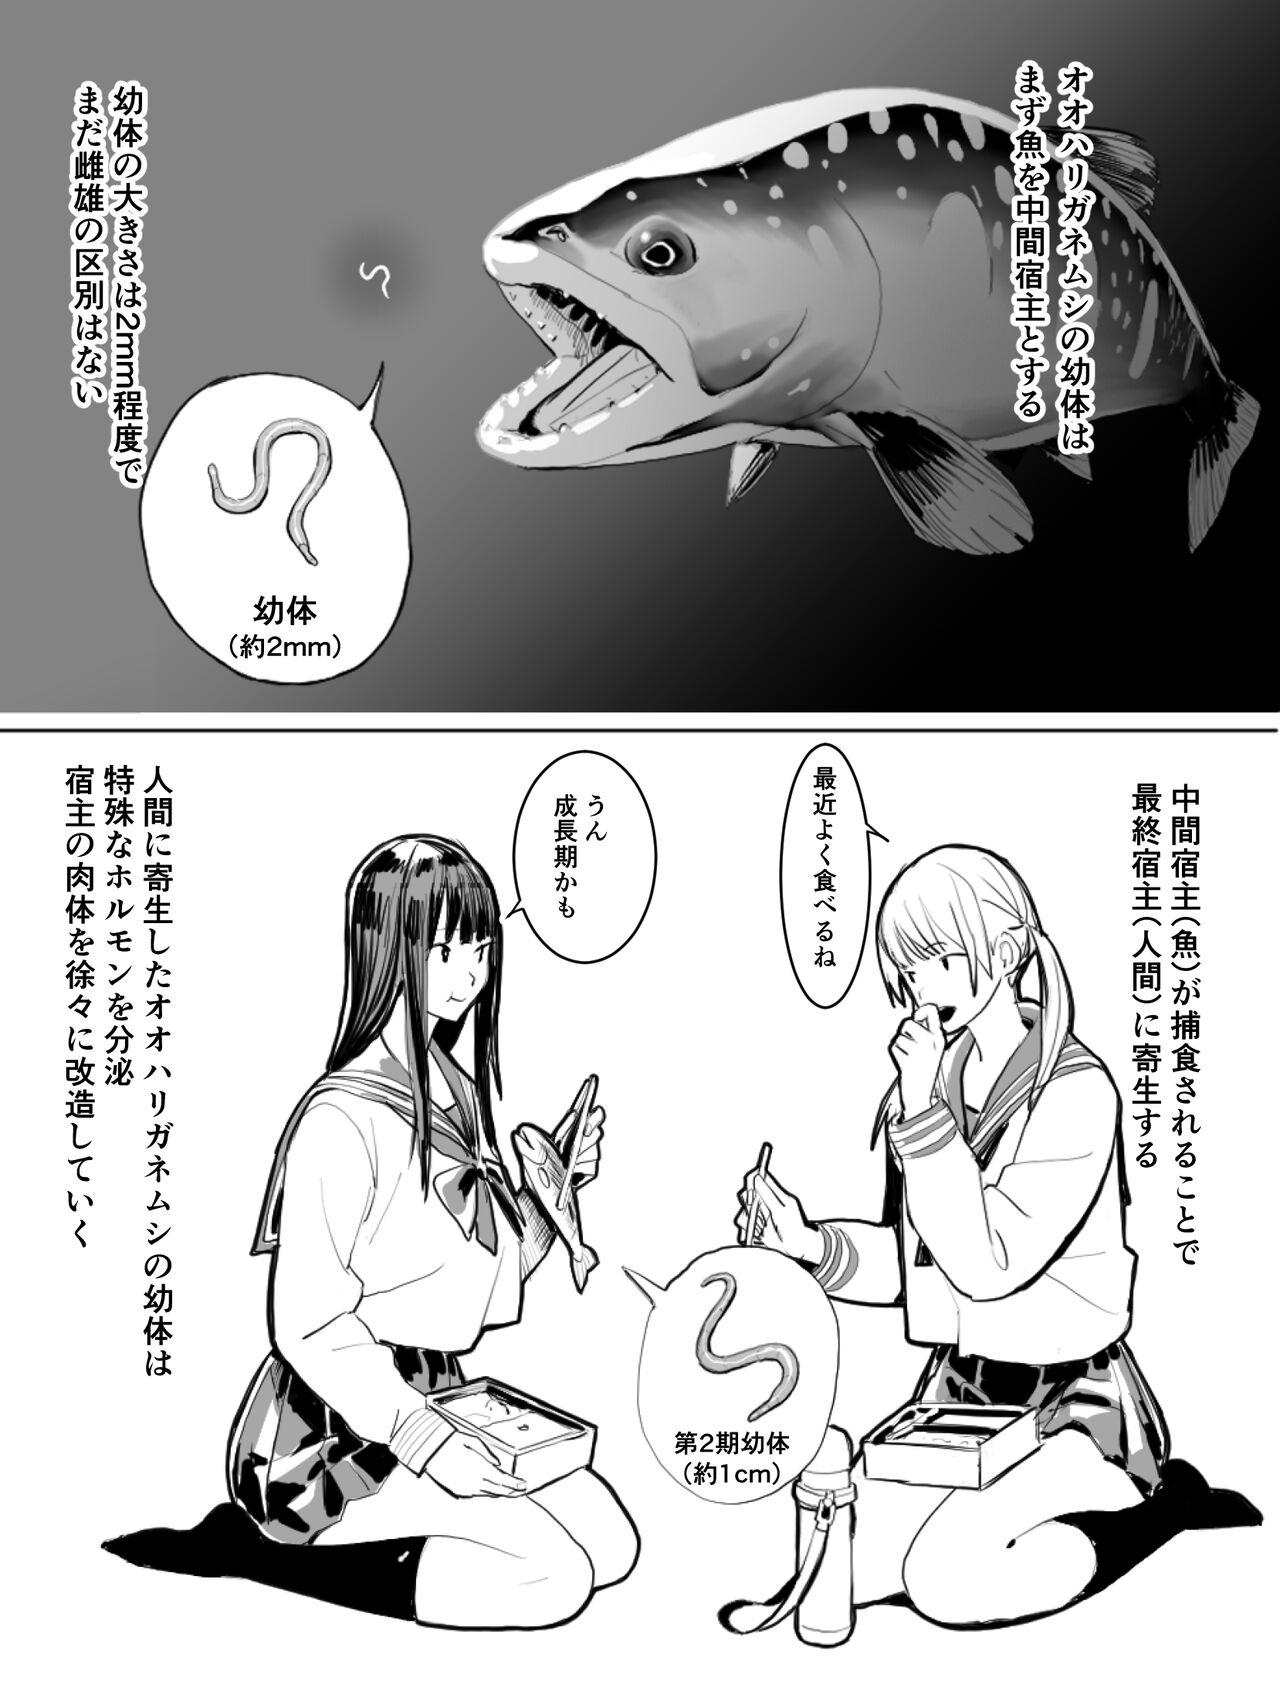 Pounding Oohariganemushi No Seitai Siririca - Page 2